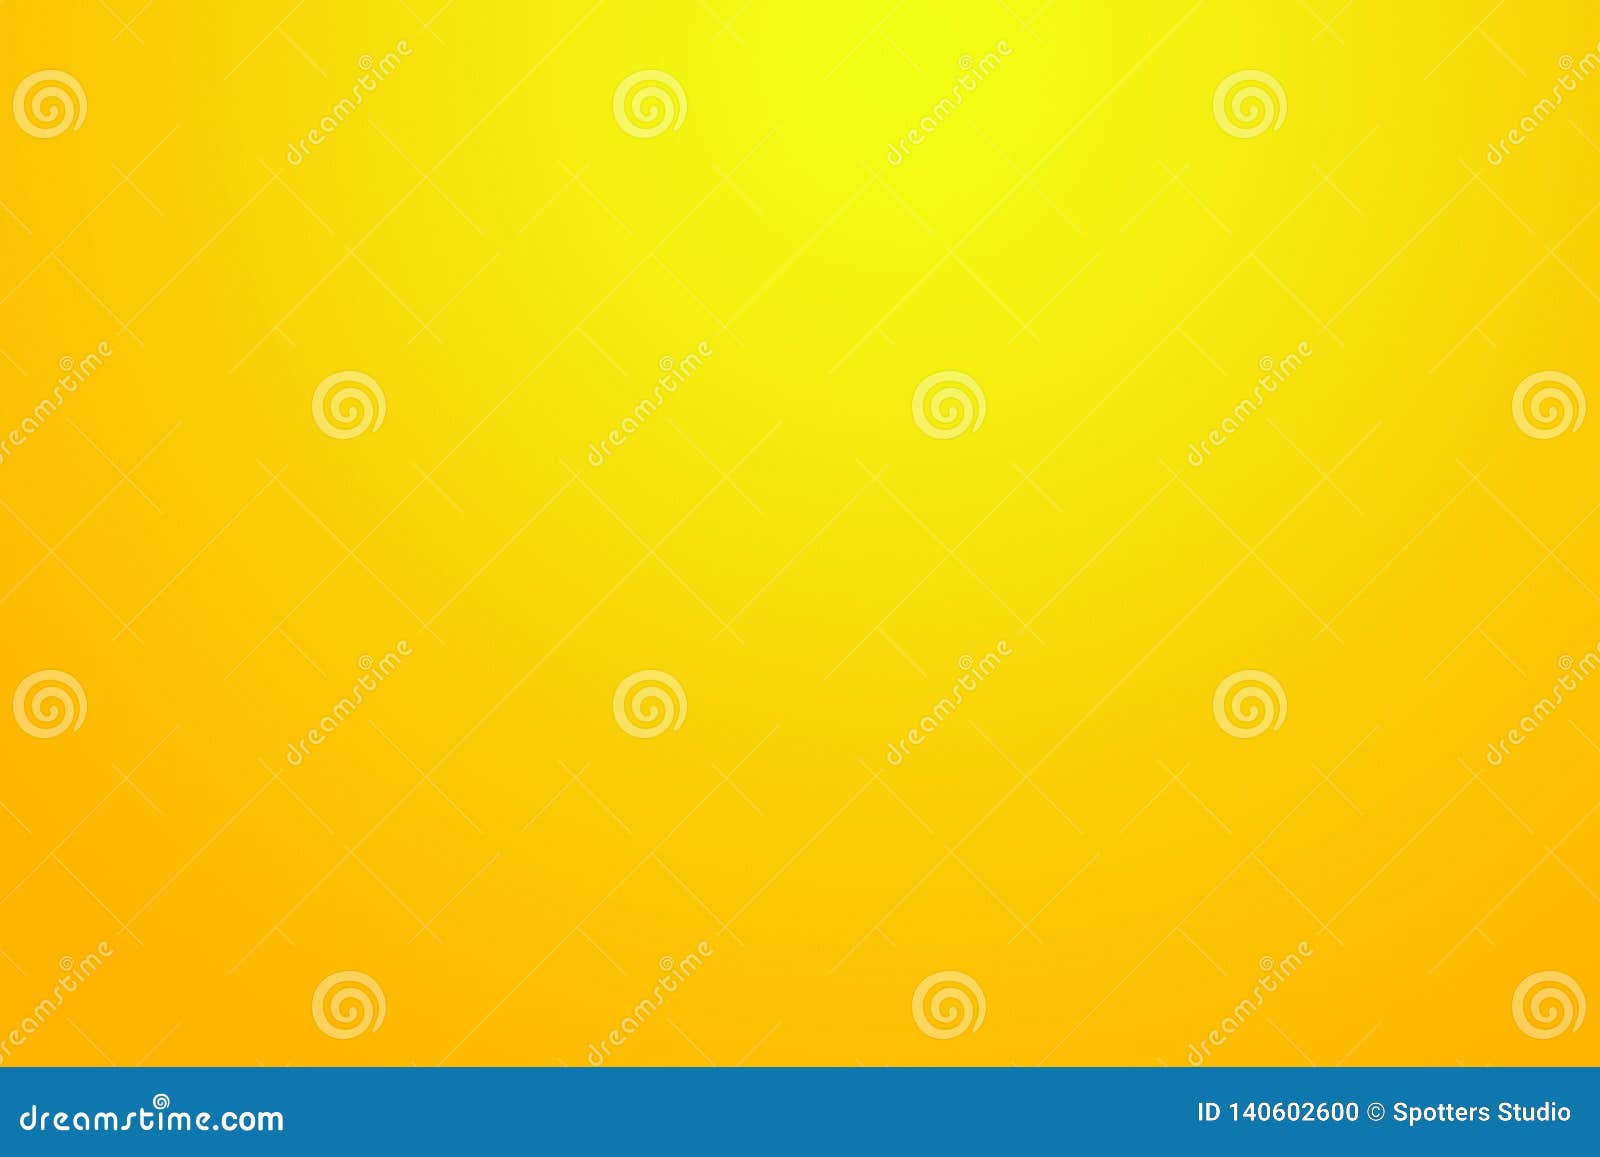 Unduh 870+ Background Kuning Abstrak HD Terbaik